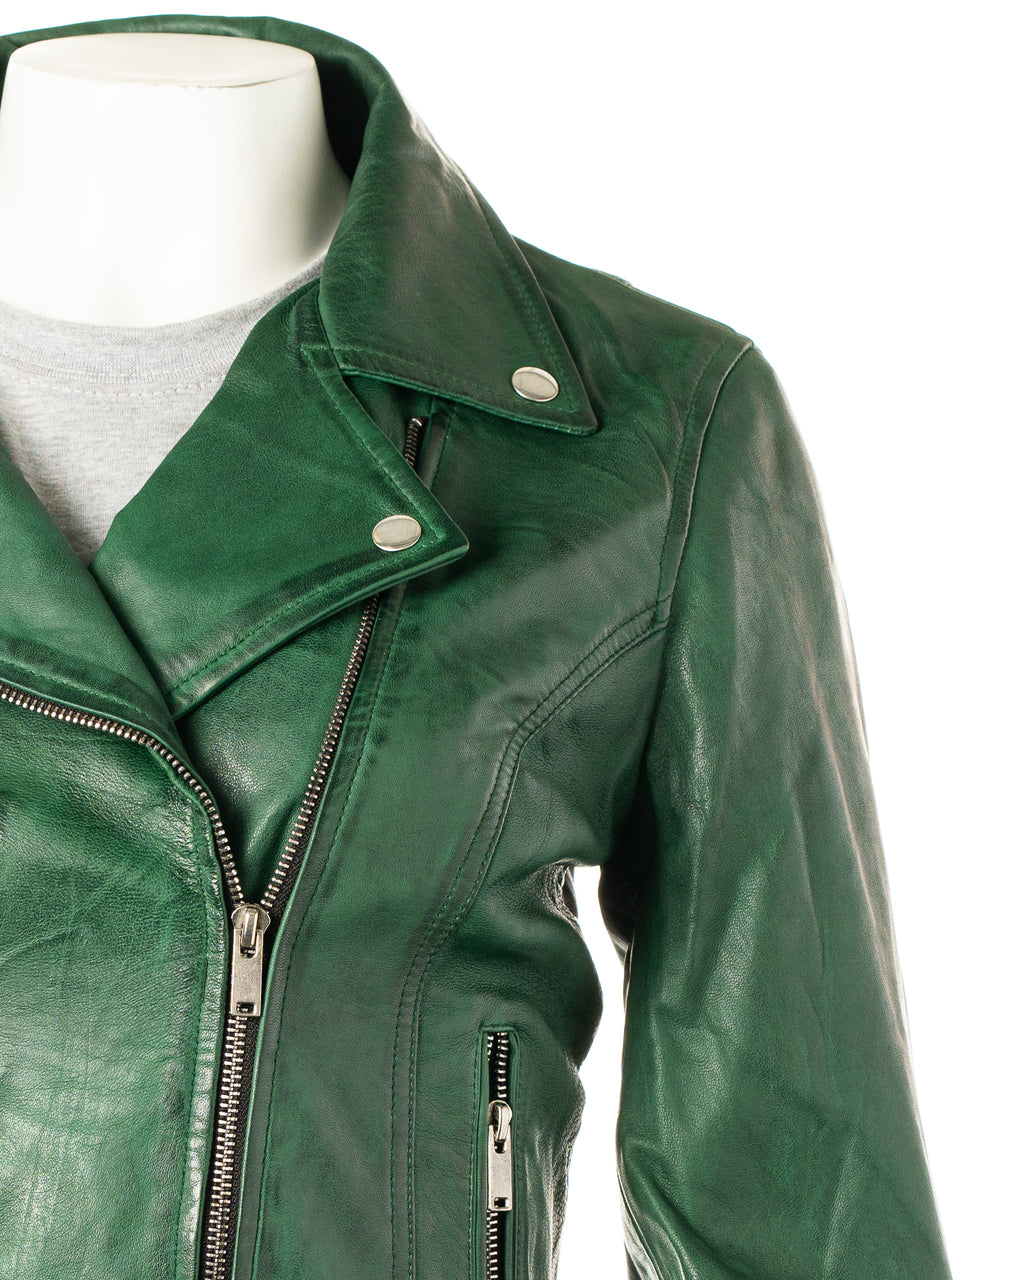 Women's Green Simple Asymmetric Leather Biker Jacket: Brigida